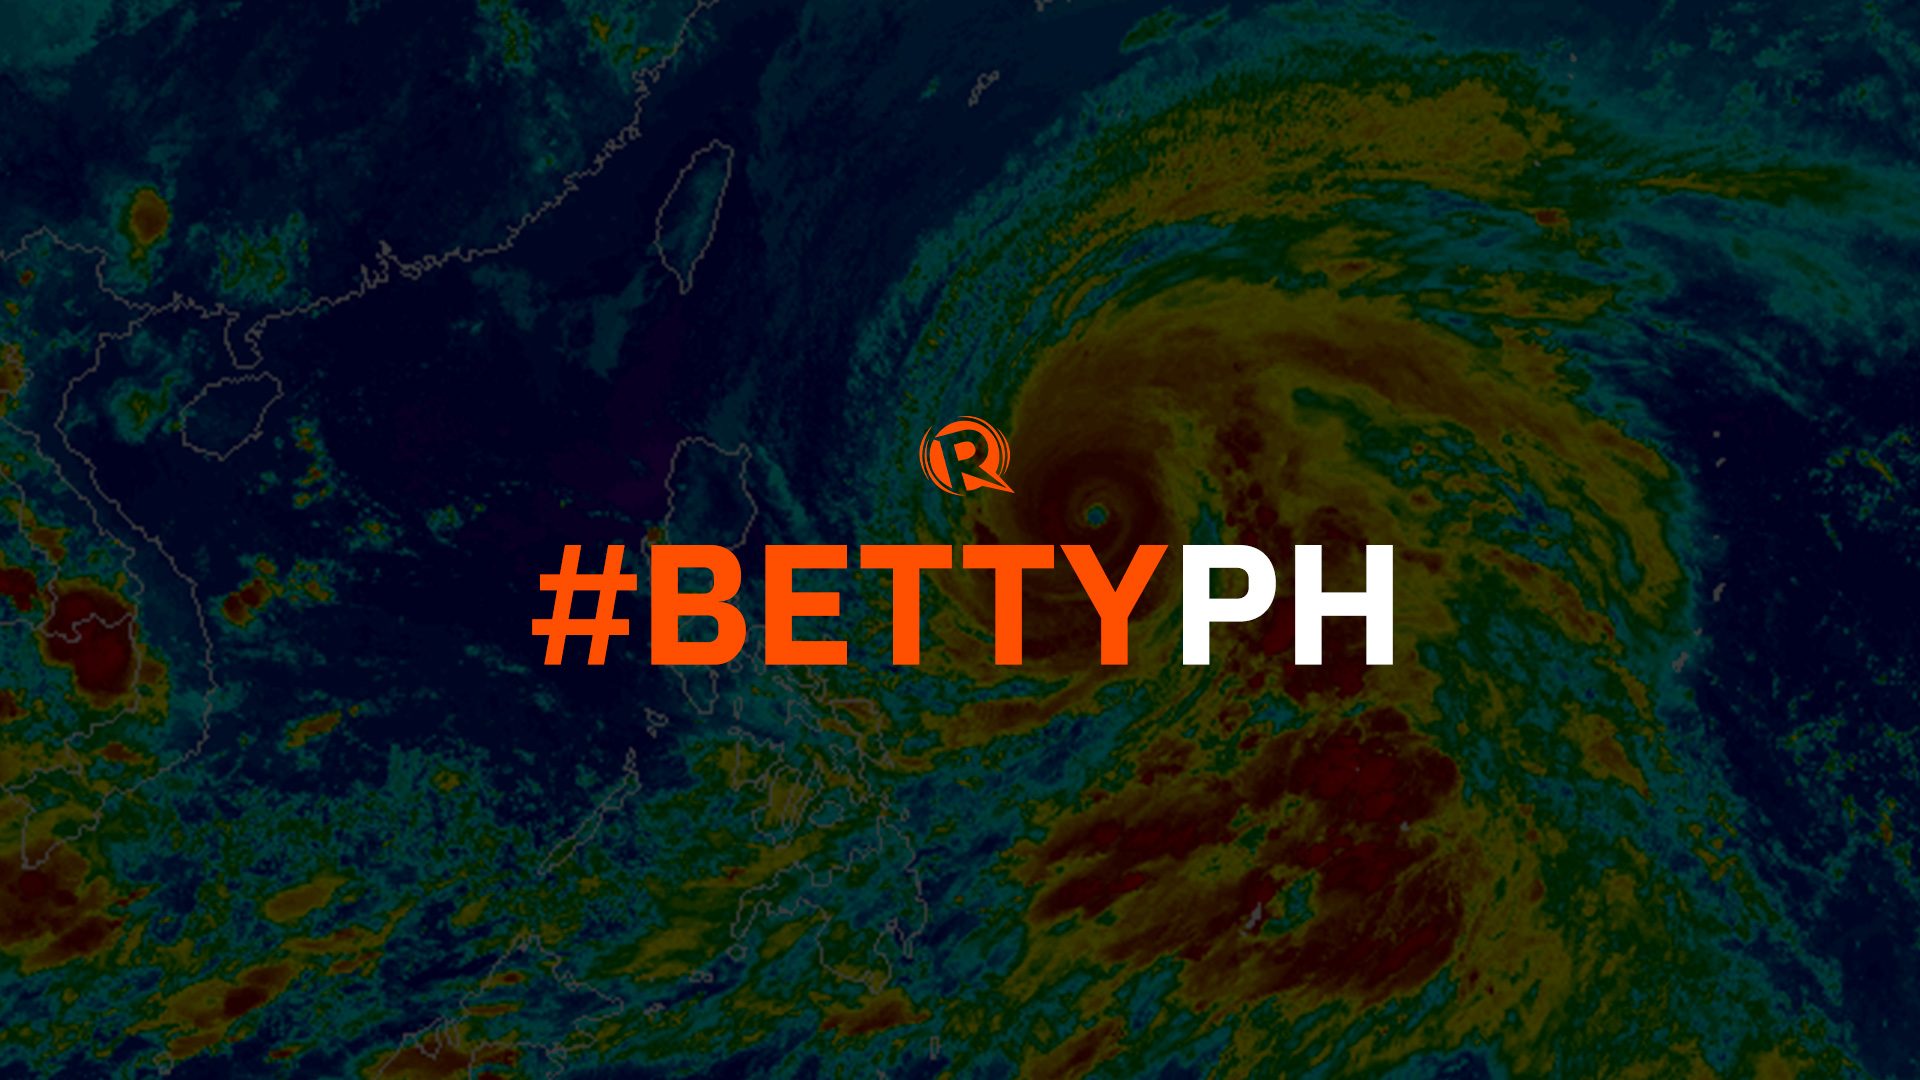 Typhoon Betty: Weather updates, forecast track, wind signals, latest news